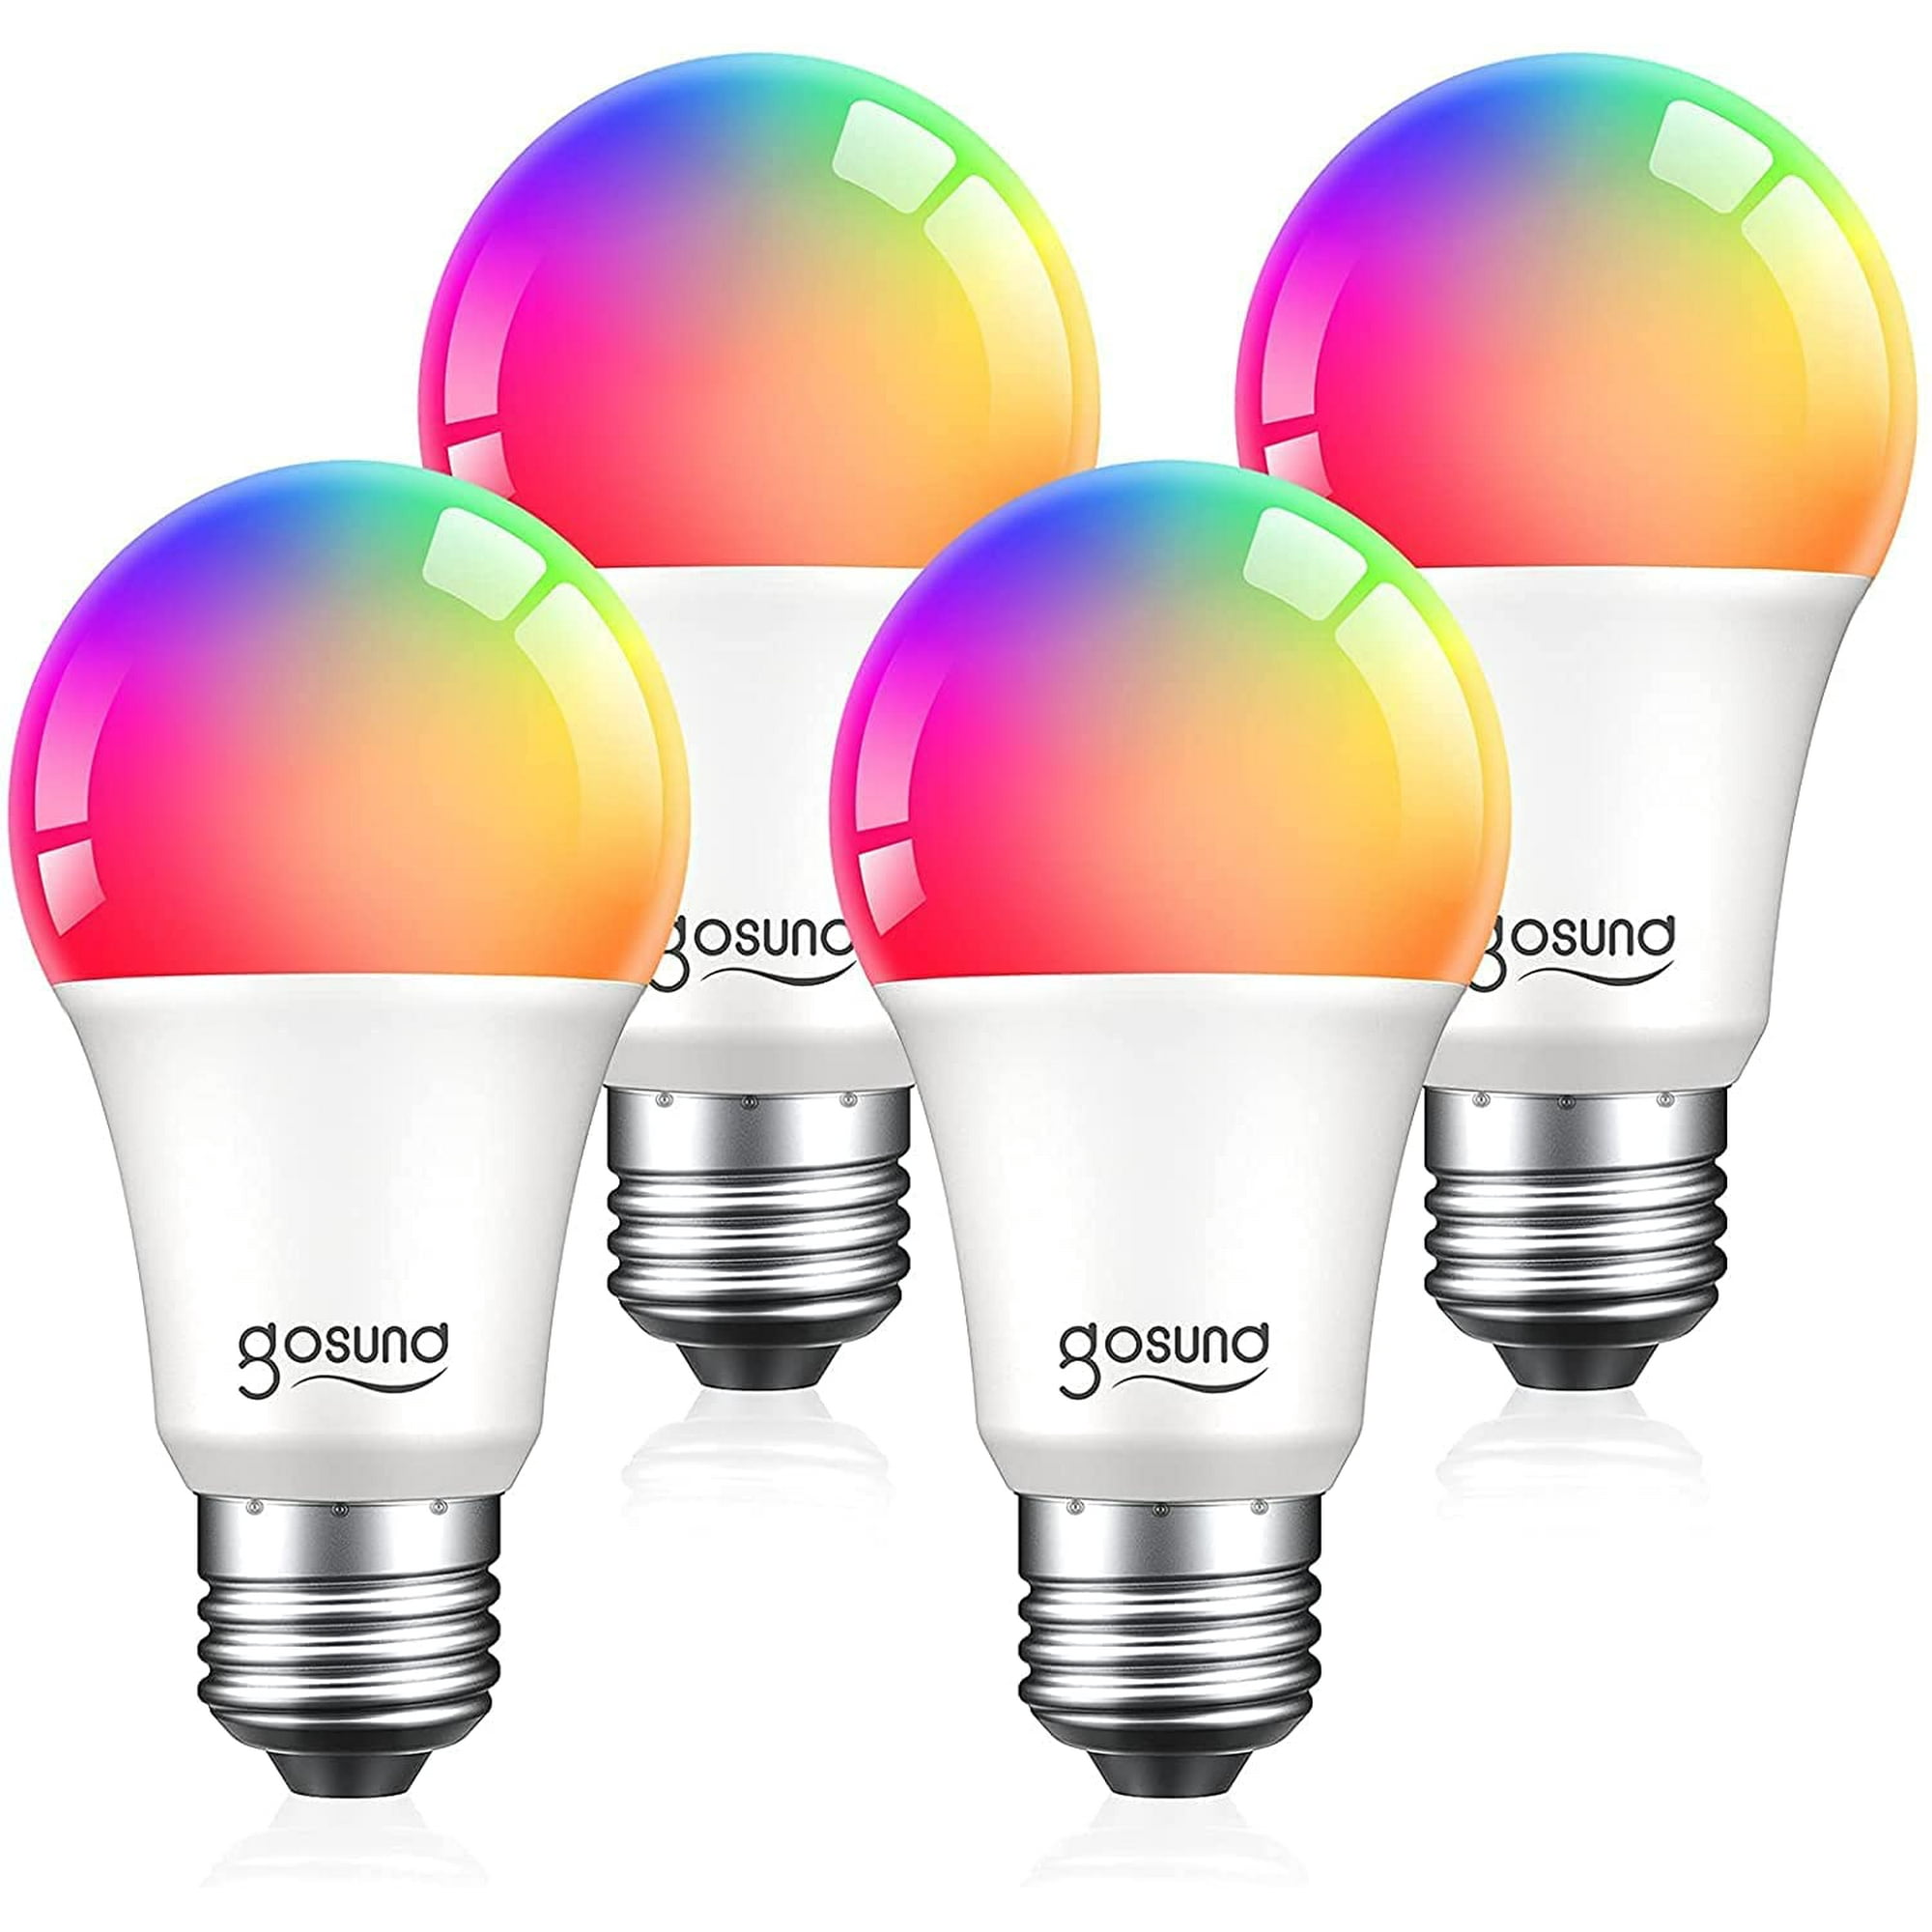 4 Pack WiFi Smart Color LED Light Bulb for Amazon Alexa/Google Home App Control